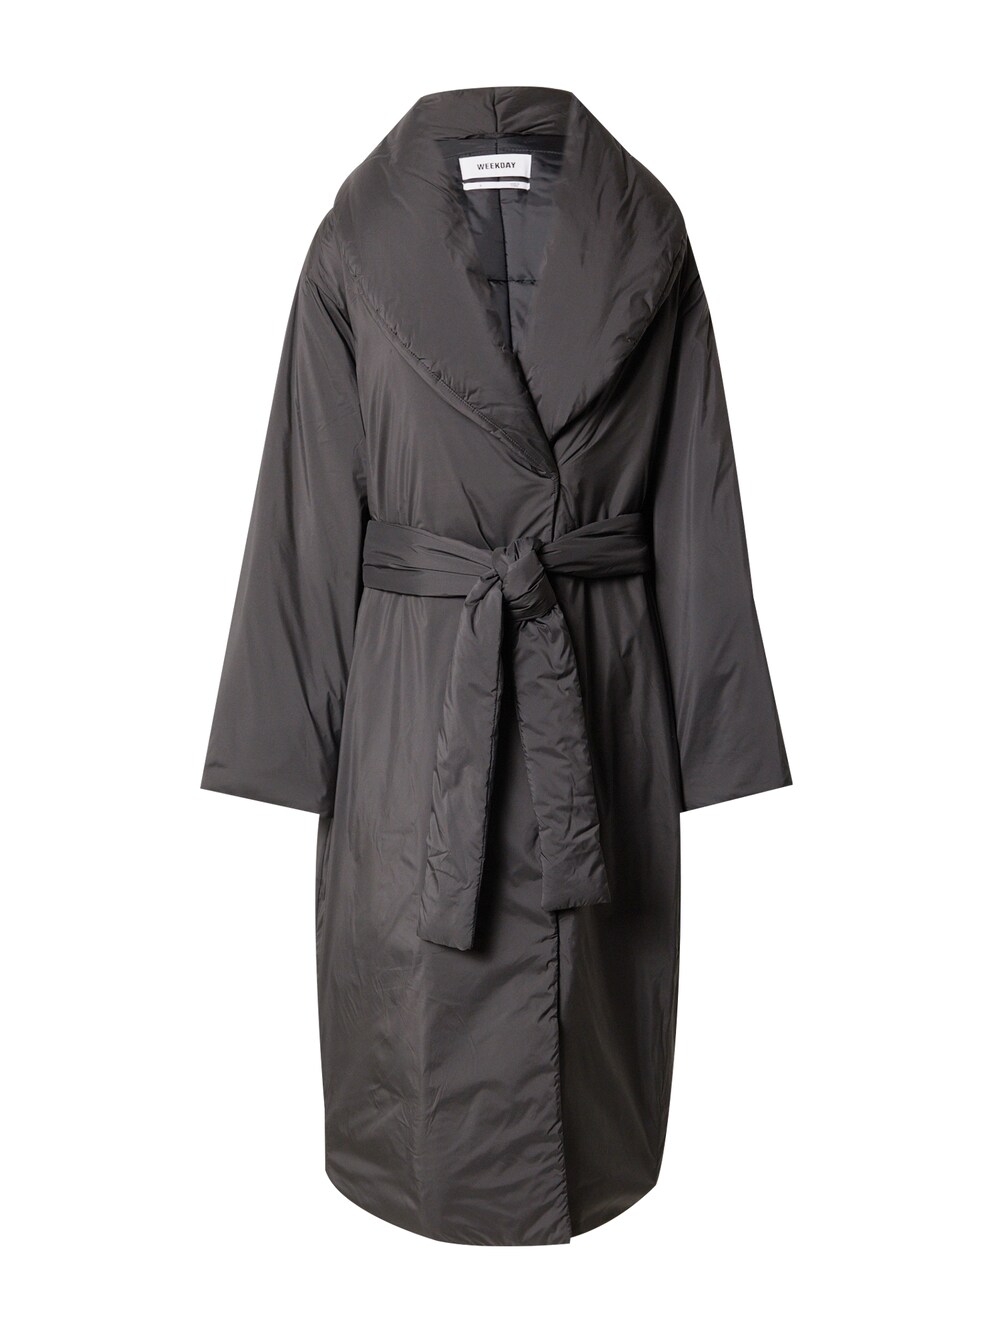 Межсезонное пальто WEEKDAY Zyan, черный межсезонное пальто weekday черный